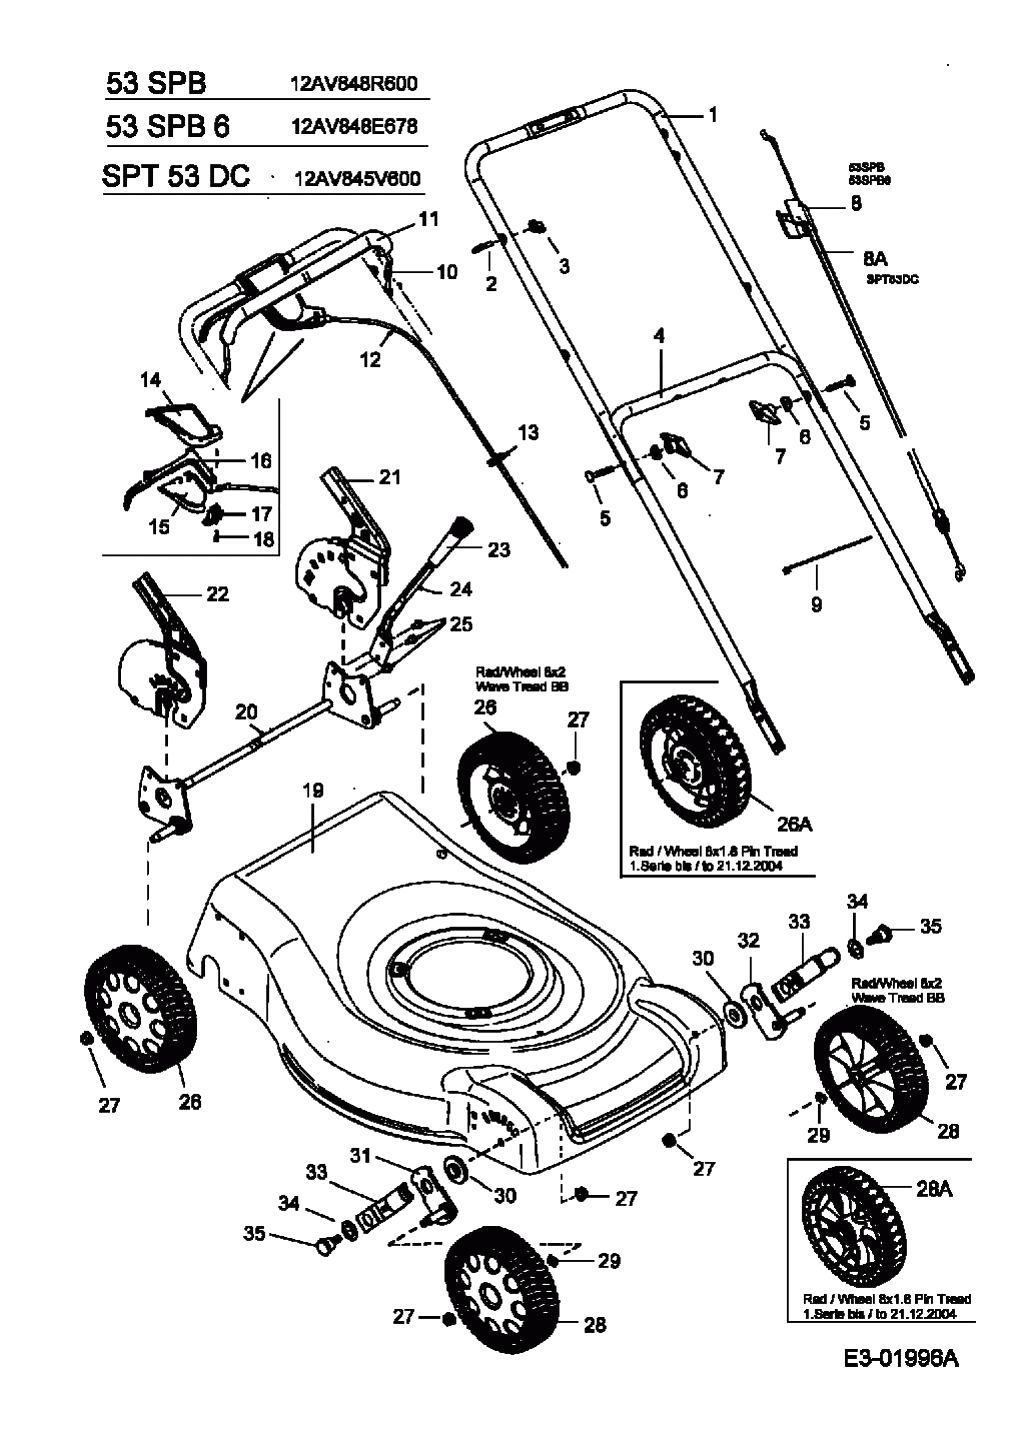 MTD Артикул 12AV848R600 (год выпуска 2005). Ручка, колеса, регулятор высоты реза